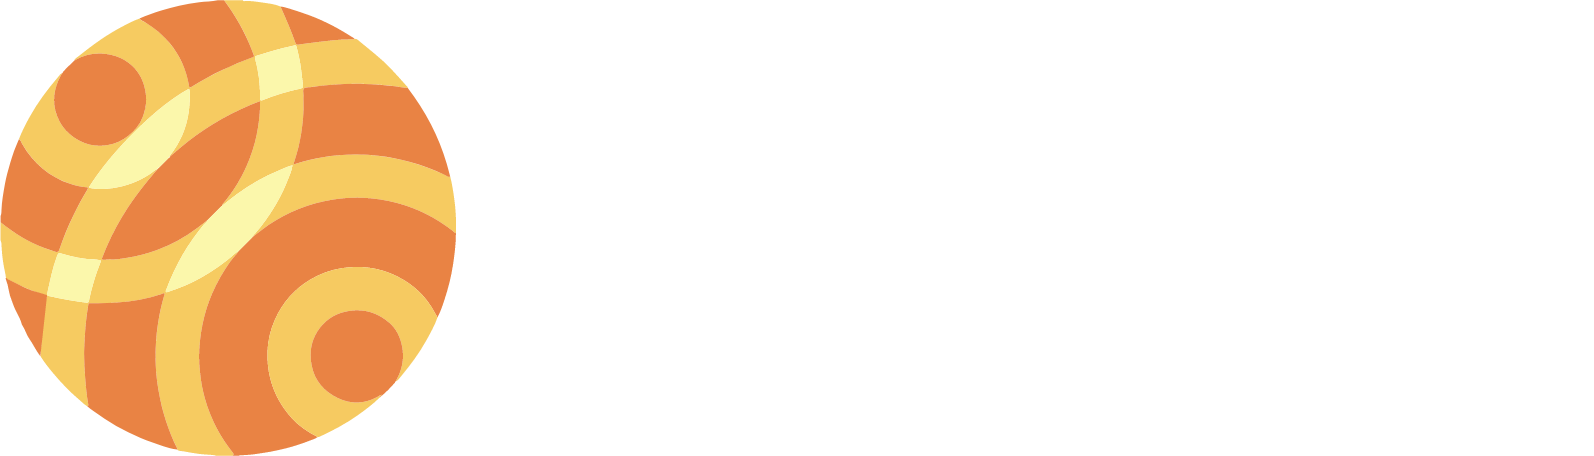 Bank of Ningbo
 logo large for dark backgrounds (transparent PNG)